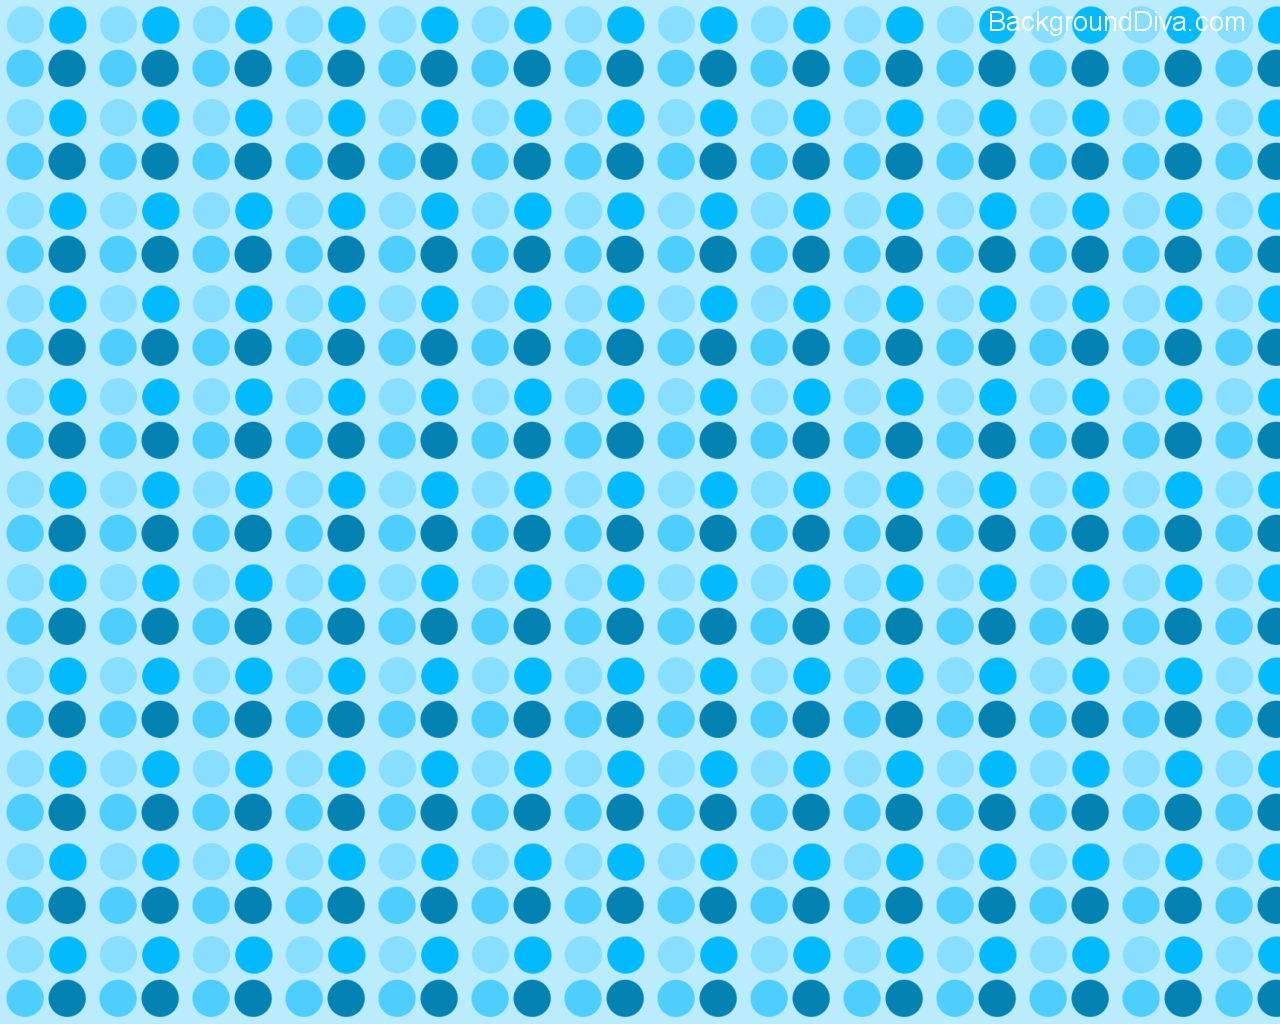 pepas azul otros pinterest blue polka dots medium